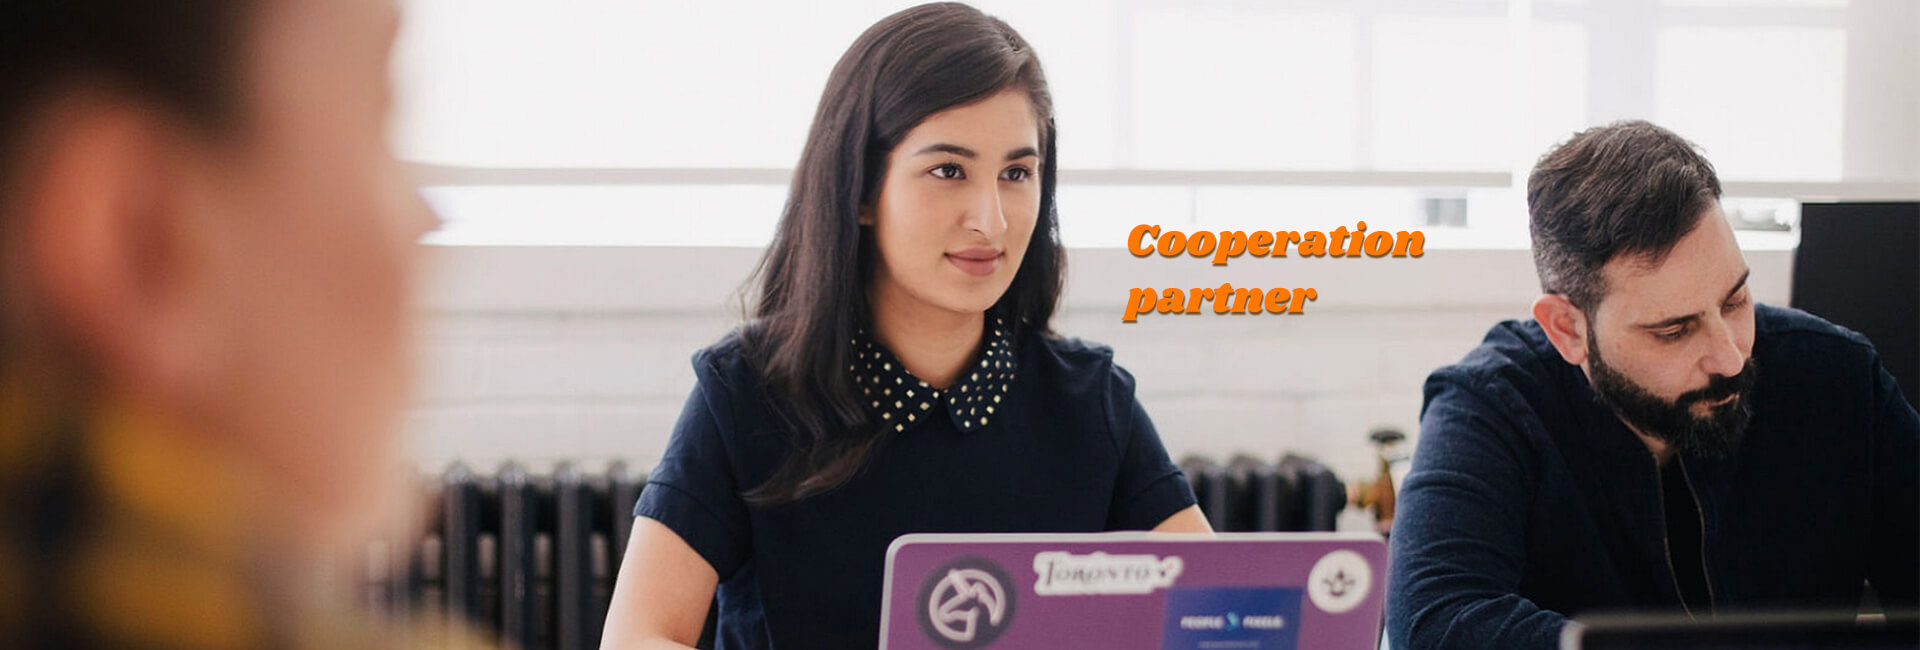 Cooperation-partner